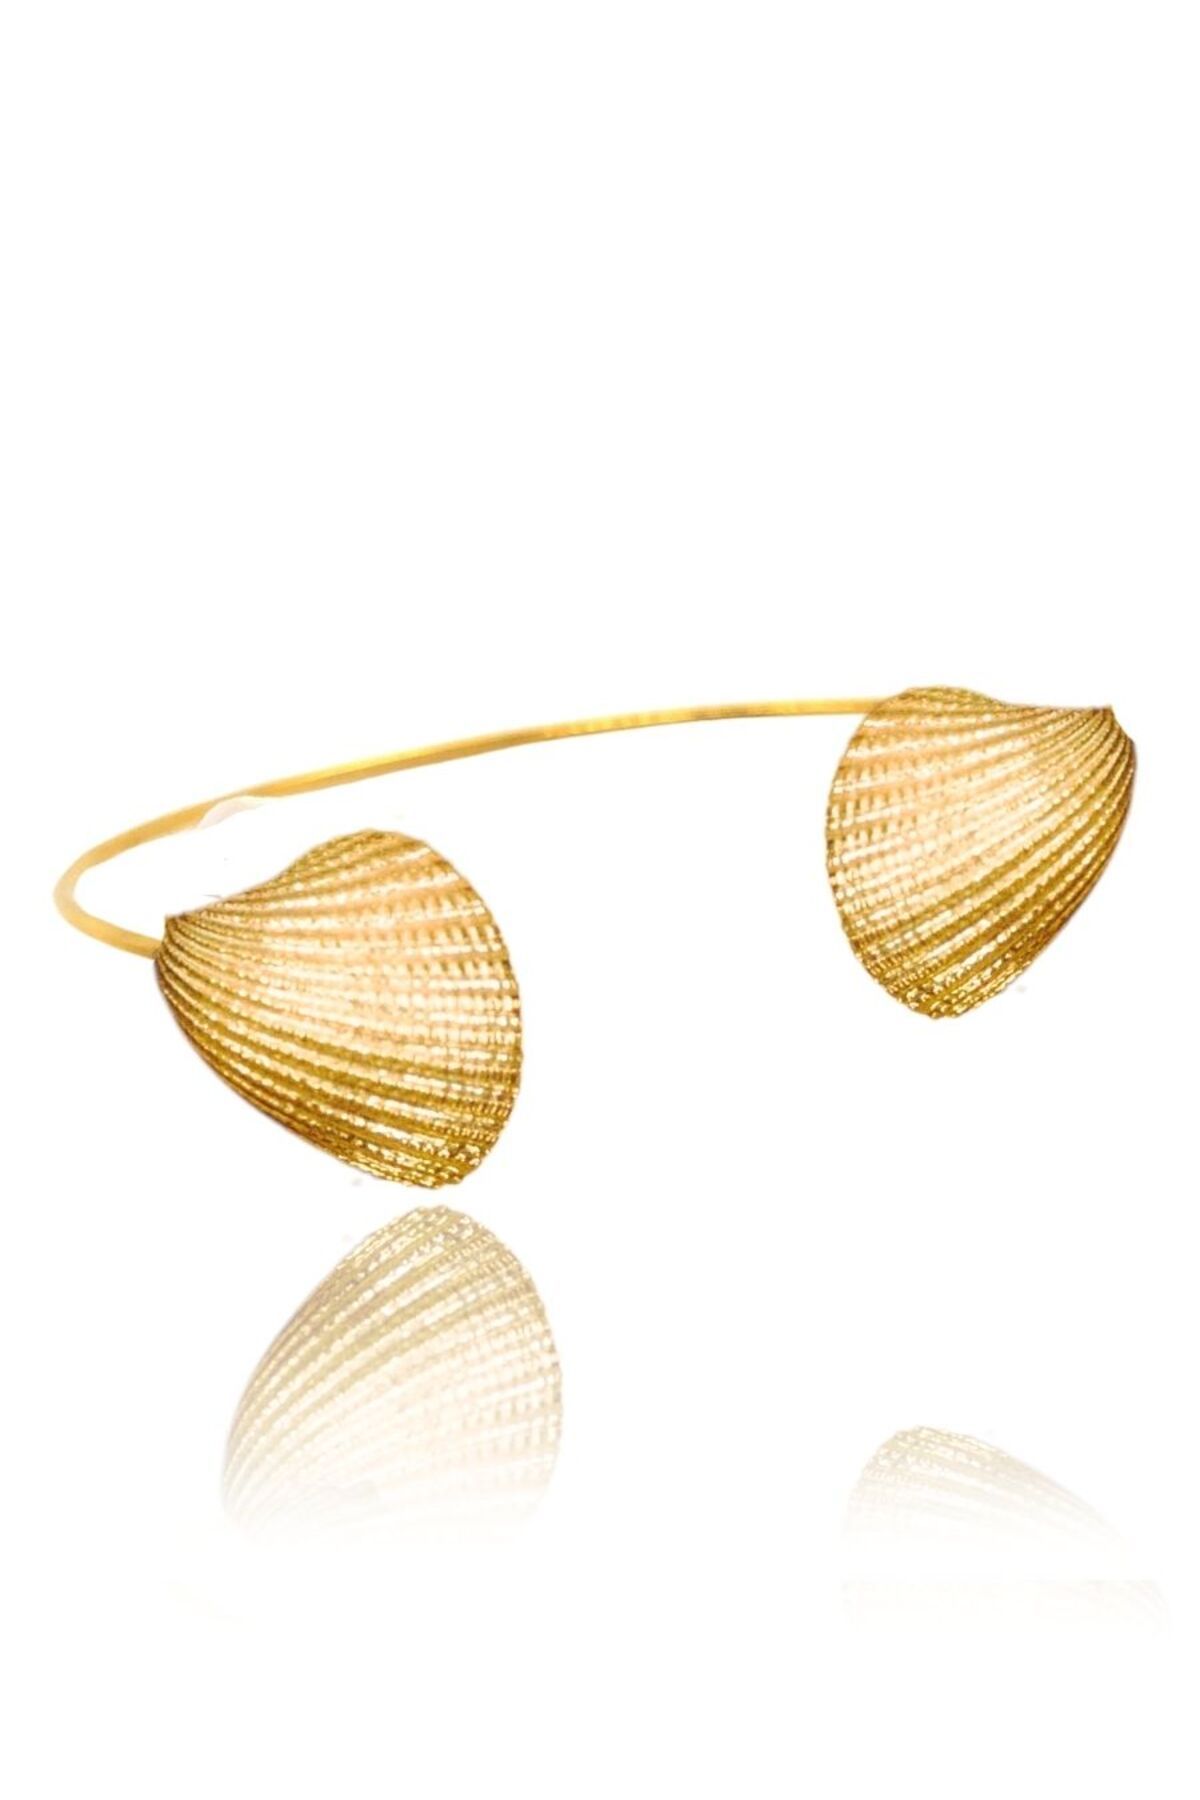 Linya Jewellery Ikili Deniz Kabuğu Kelepçe Gold